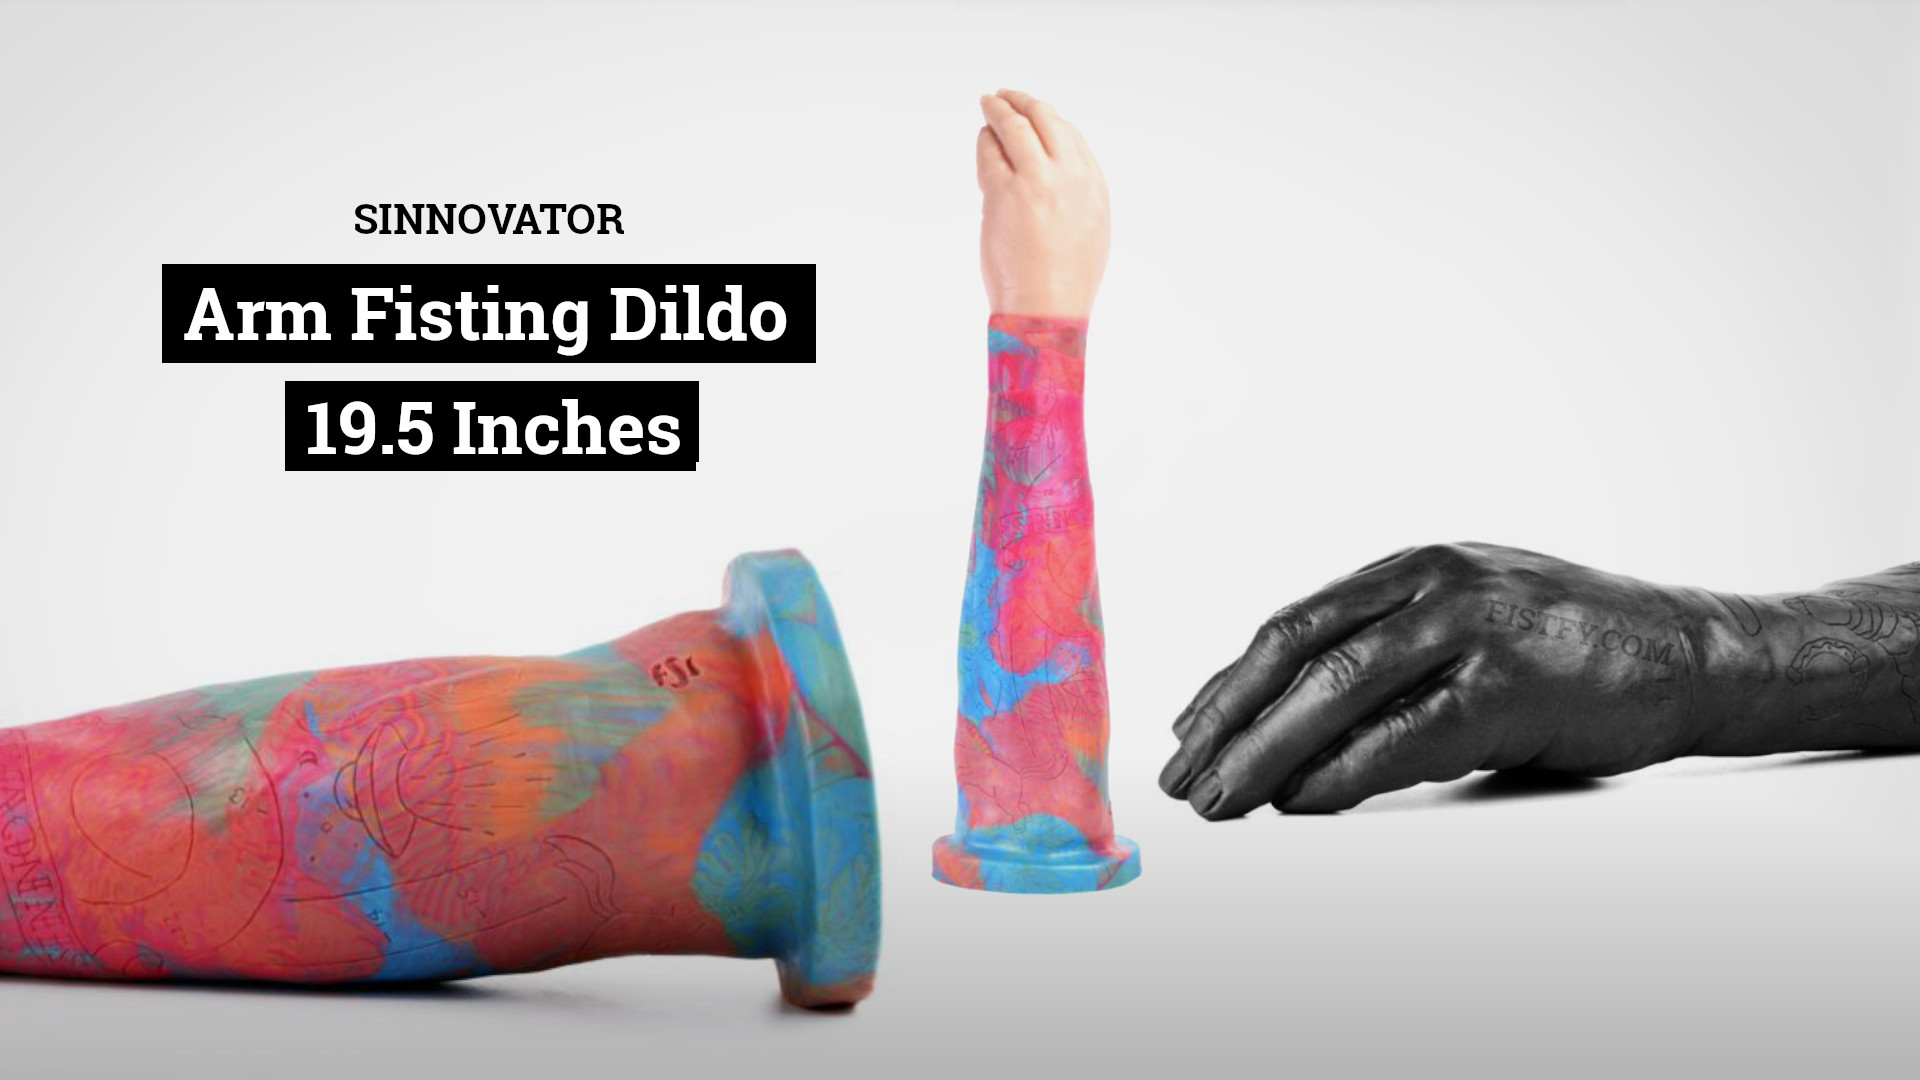 Sinnovator Arm Platinum Silicone Fisting Dildo 19.5 Inches